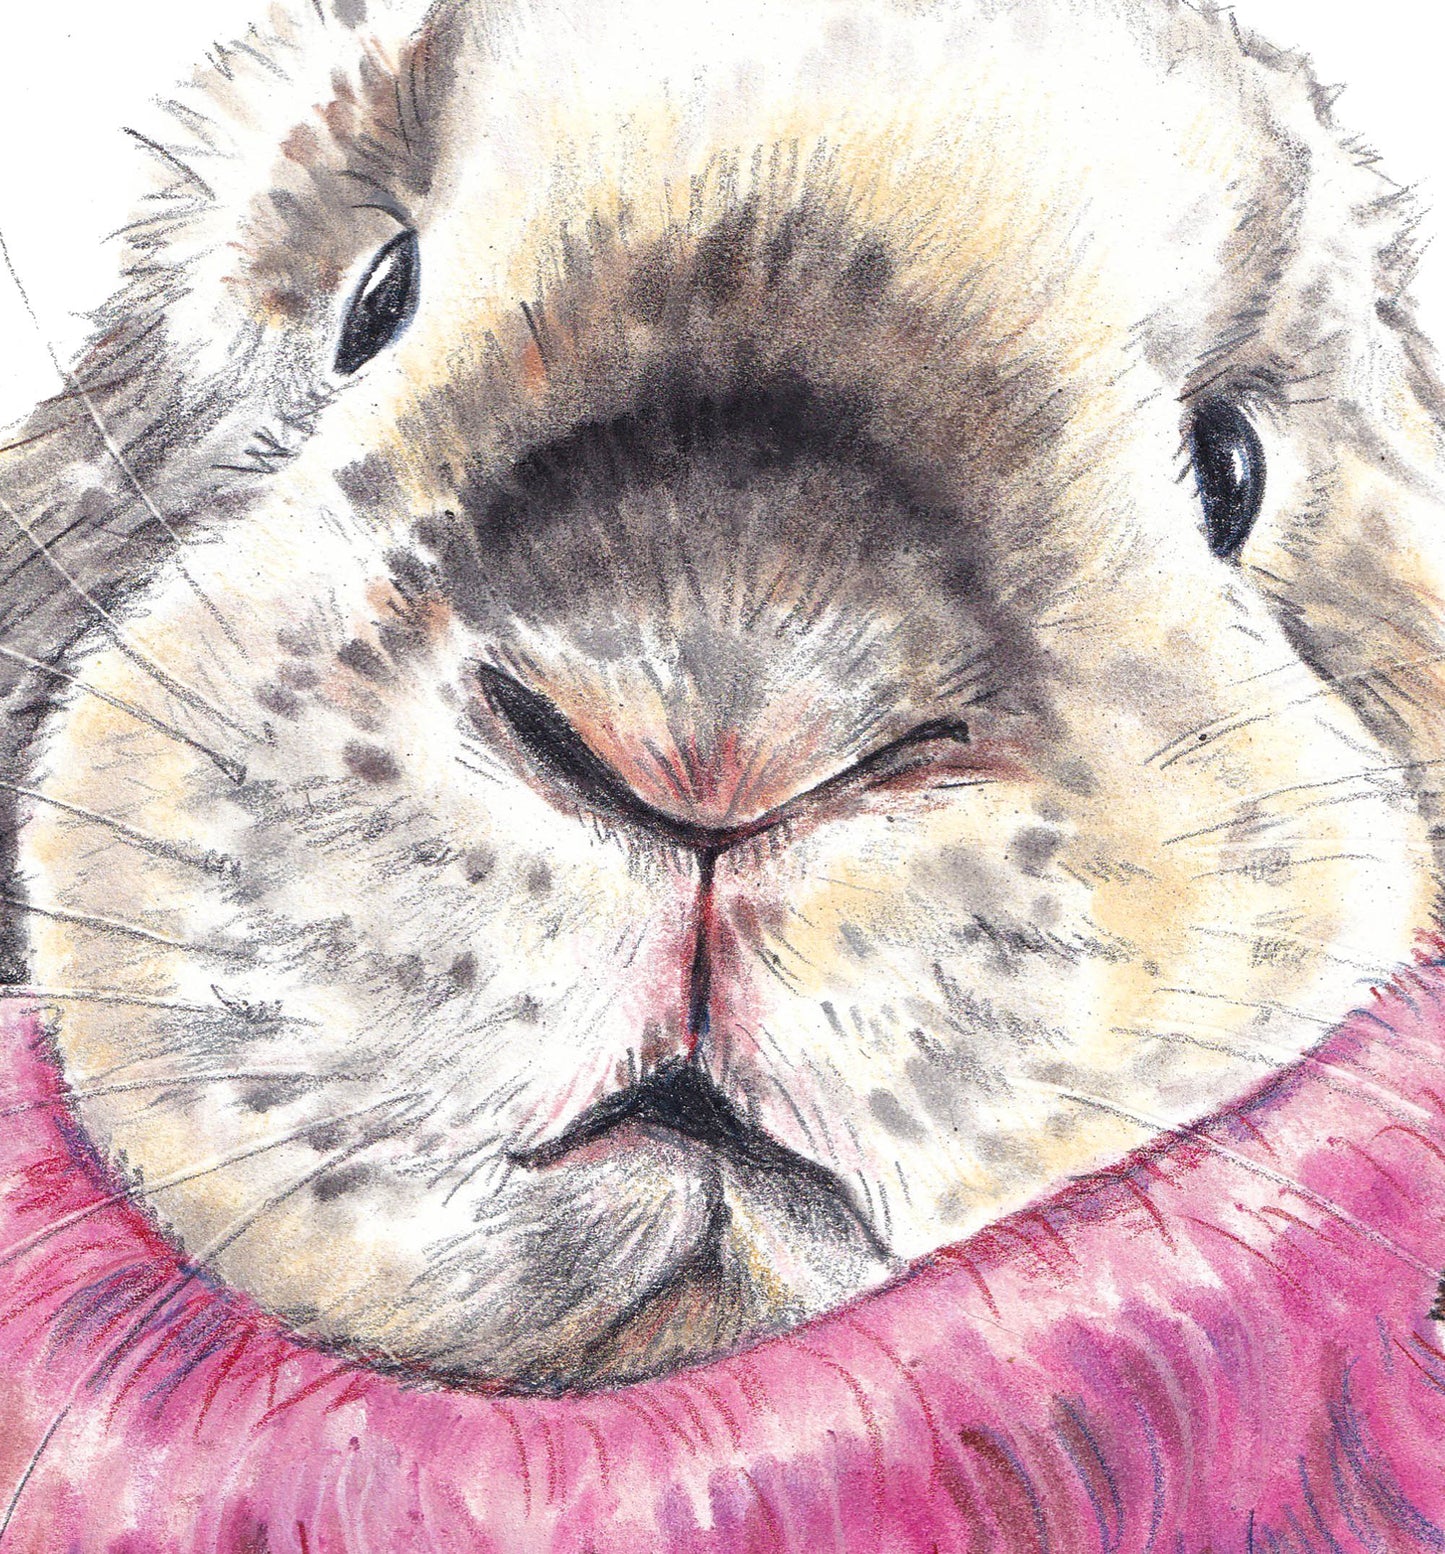 Pastel drawing of a lop eared bunny rabbit wearing a pink mohair turtleneck sweater. Art by Deidre Wicks